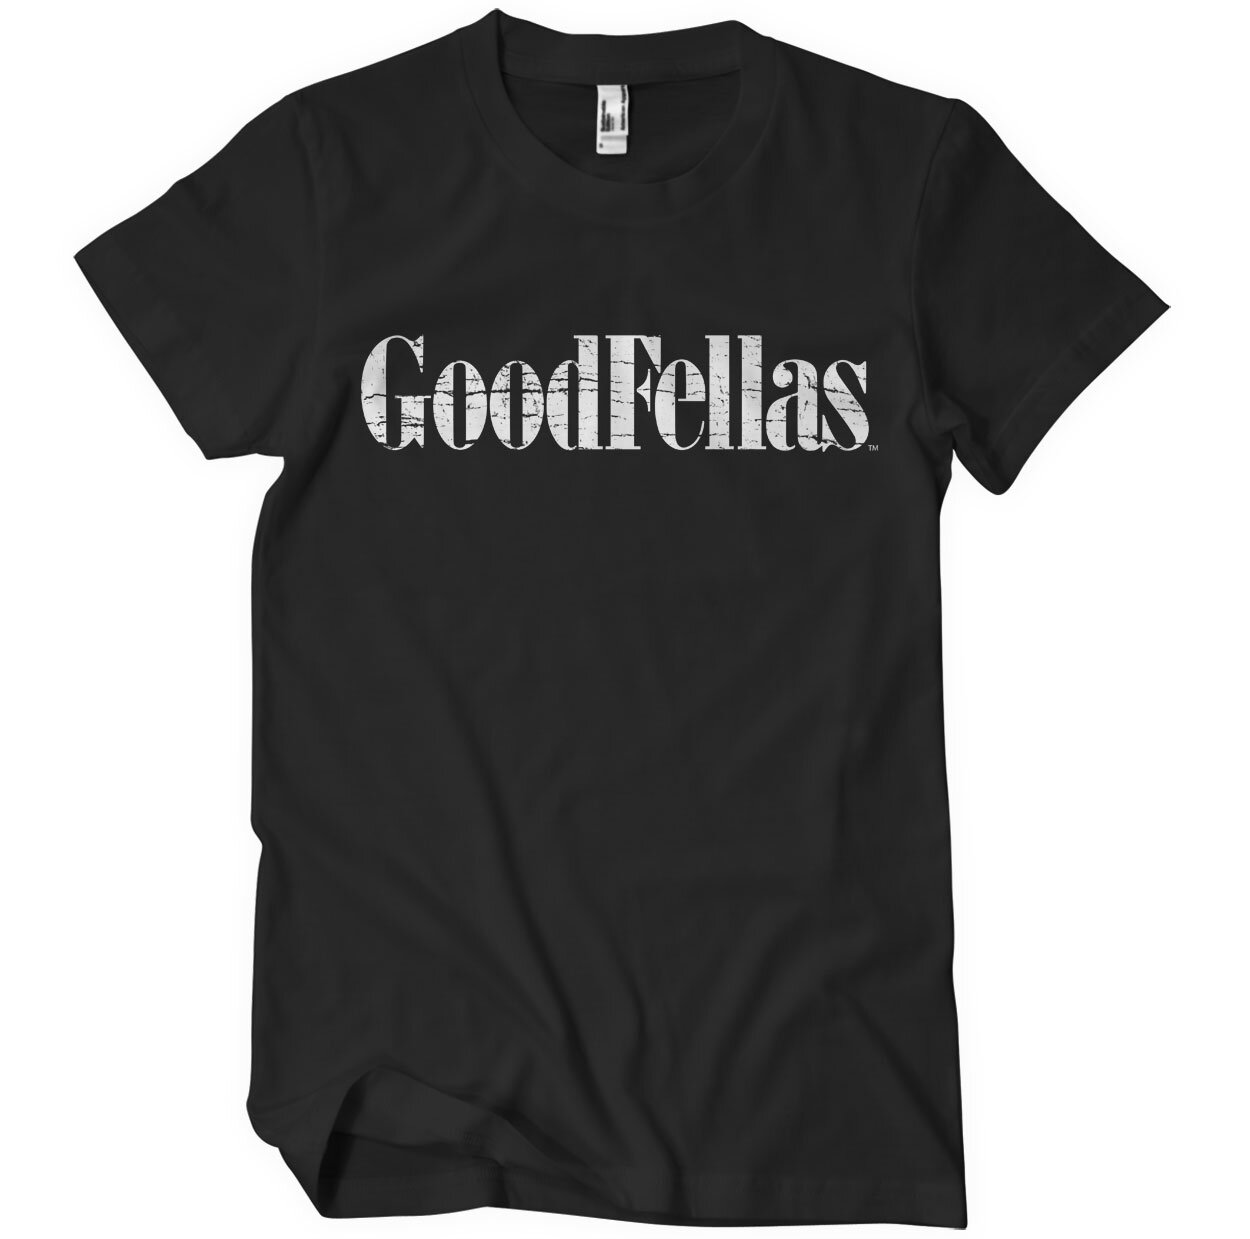 Goodfellas Cracked Logo T-Shirt